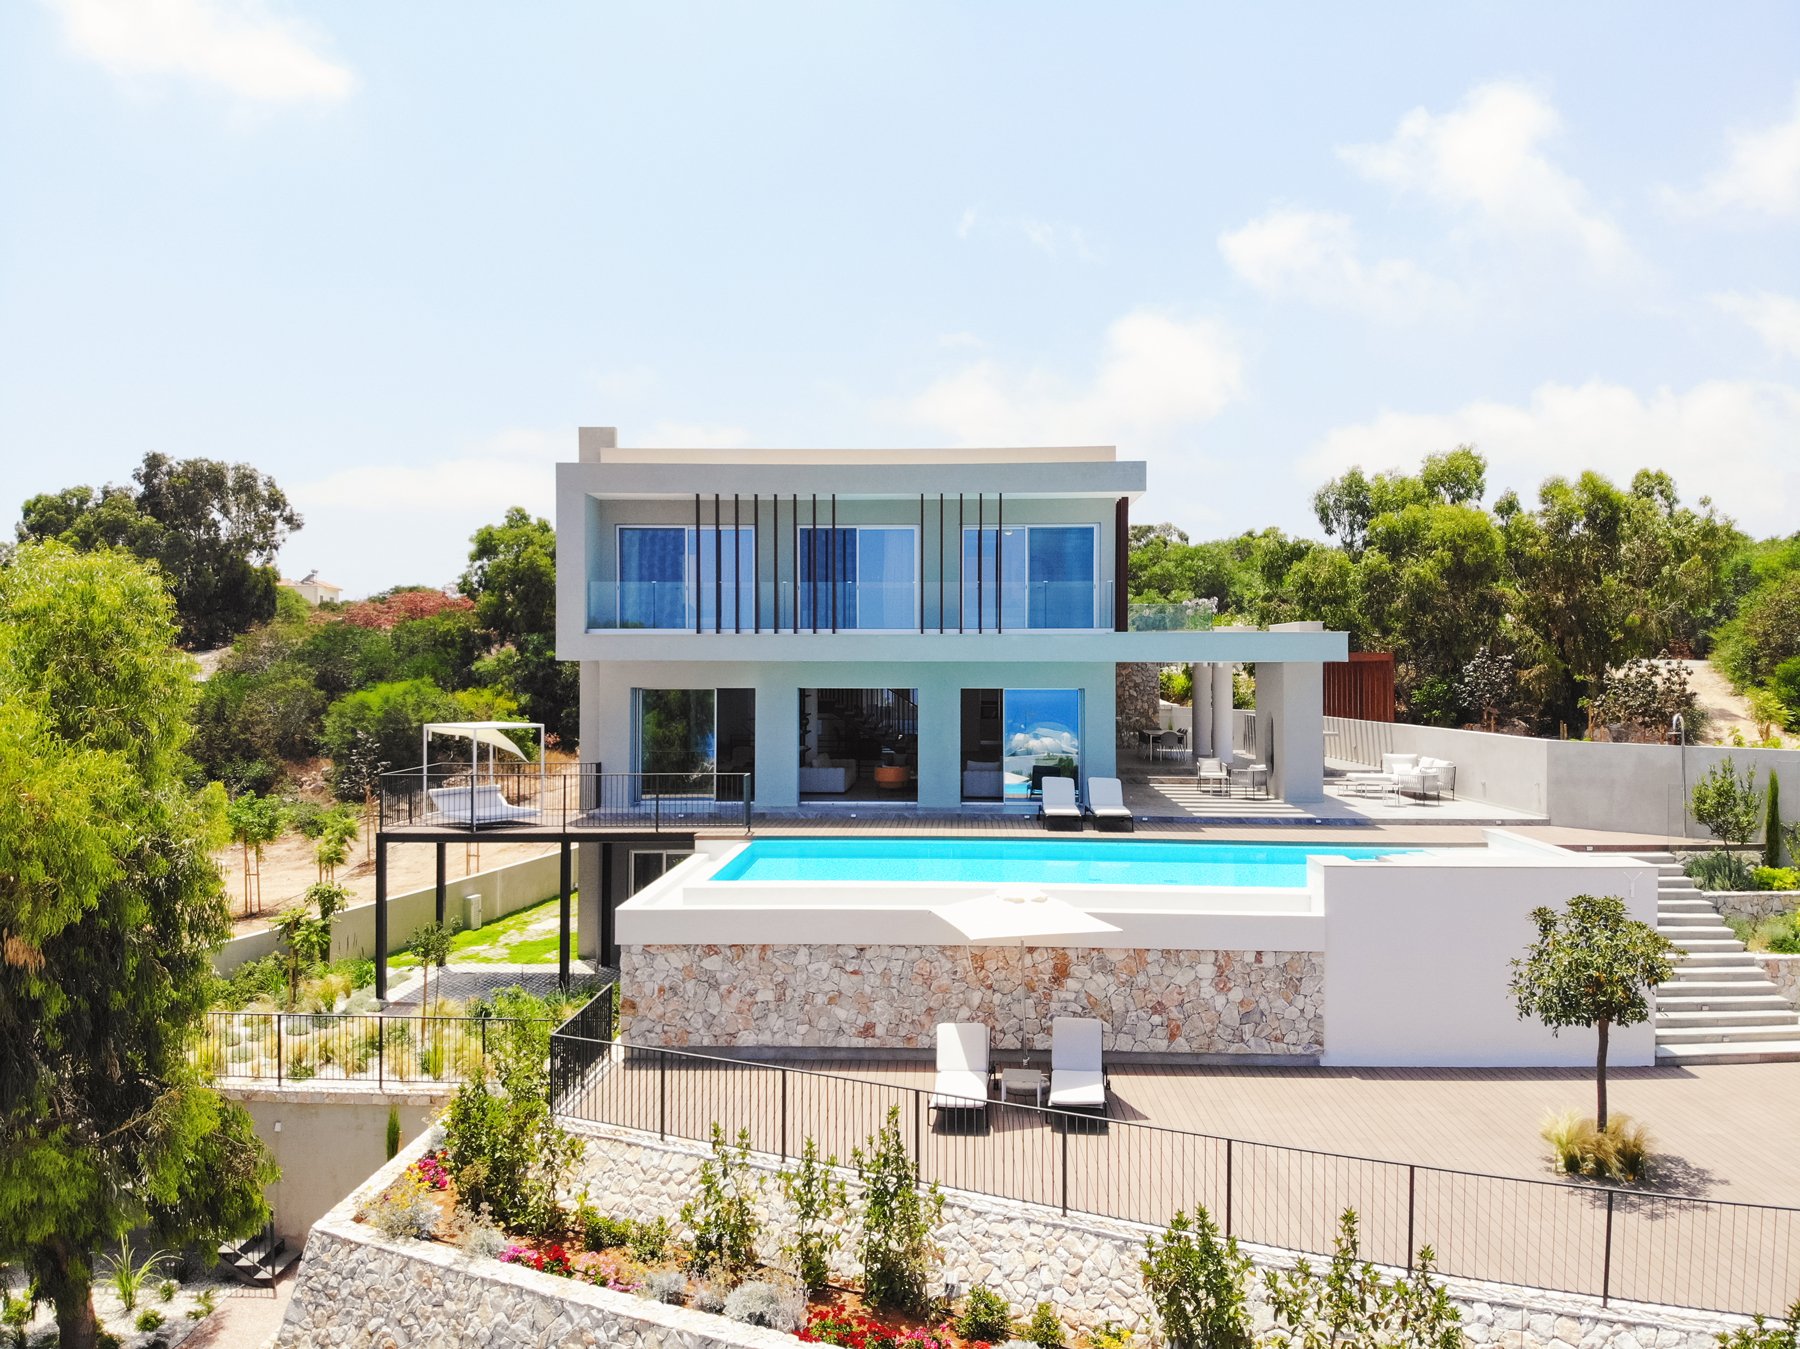  Atopetra Residence in Cyprus,  Elena Karoula Interior Architecture  